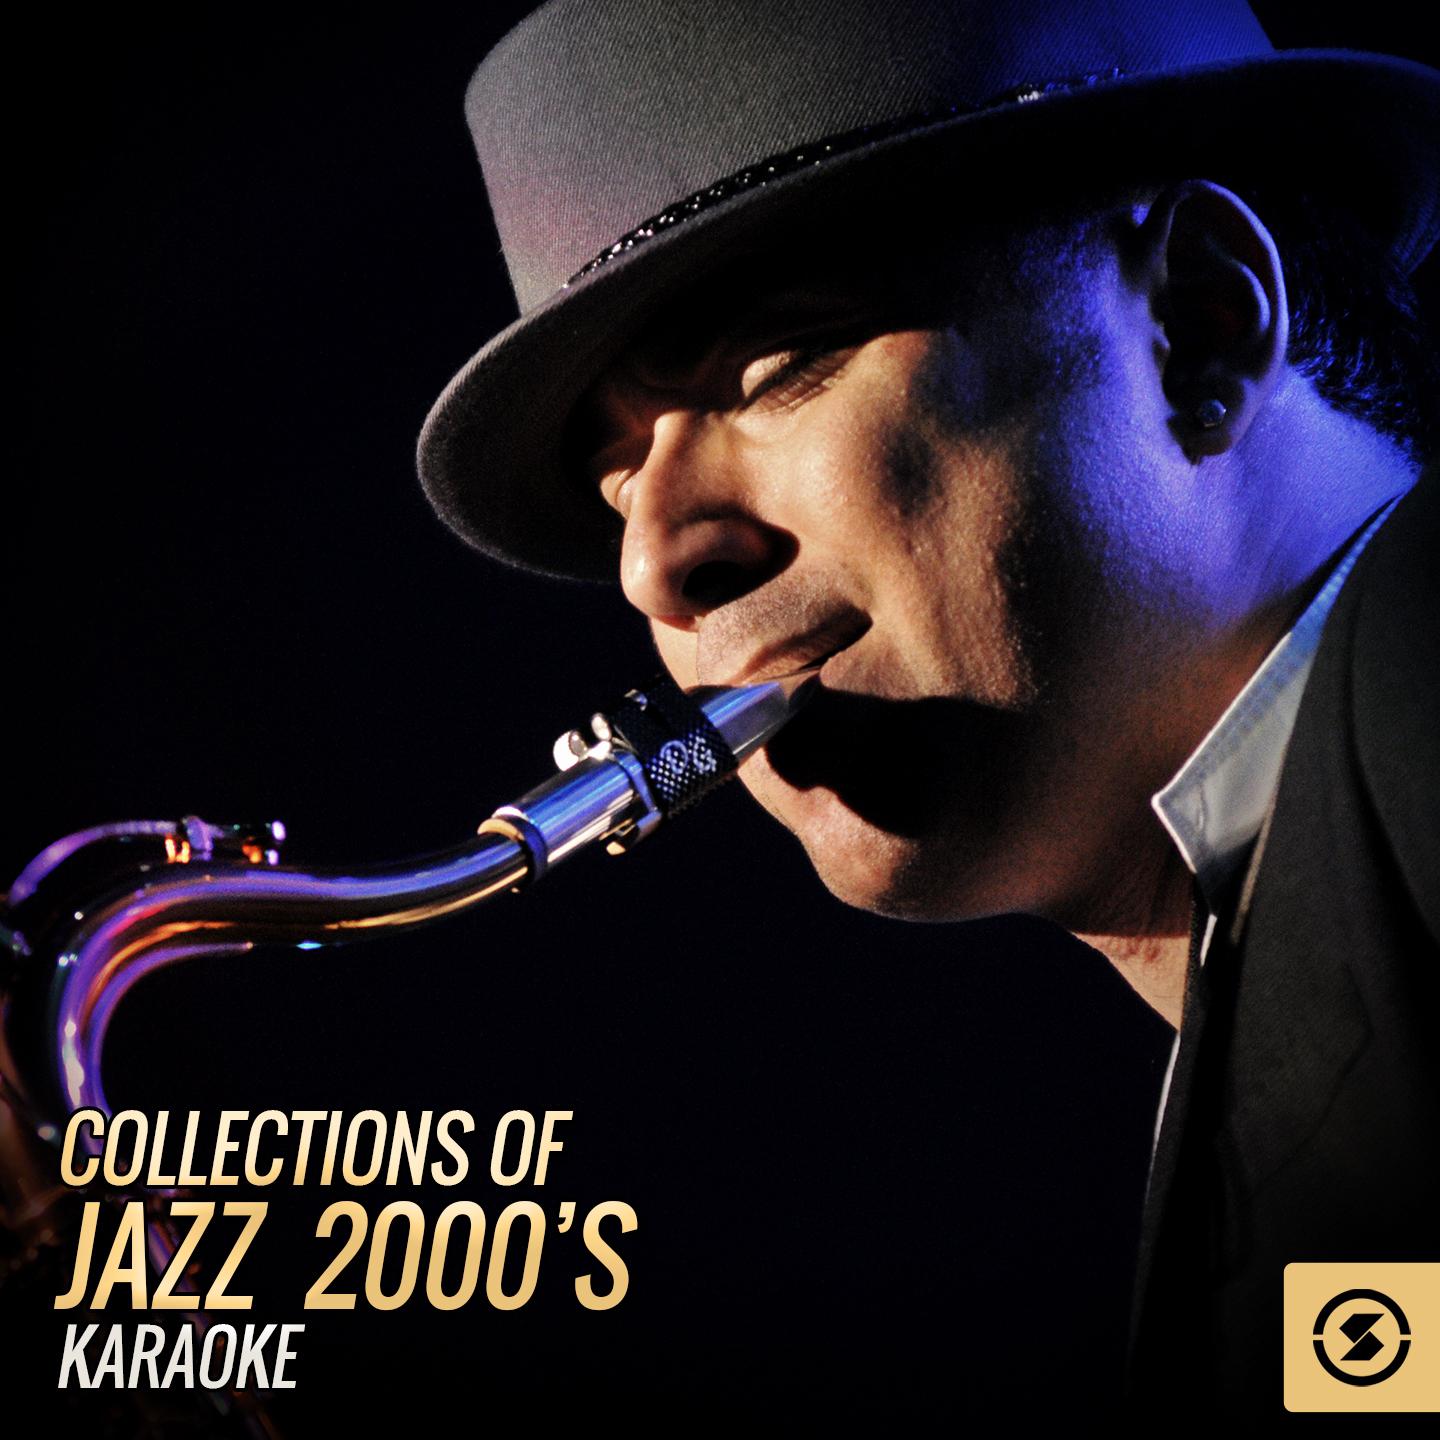 Collections of Jazz 2000s Karaoke